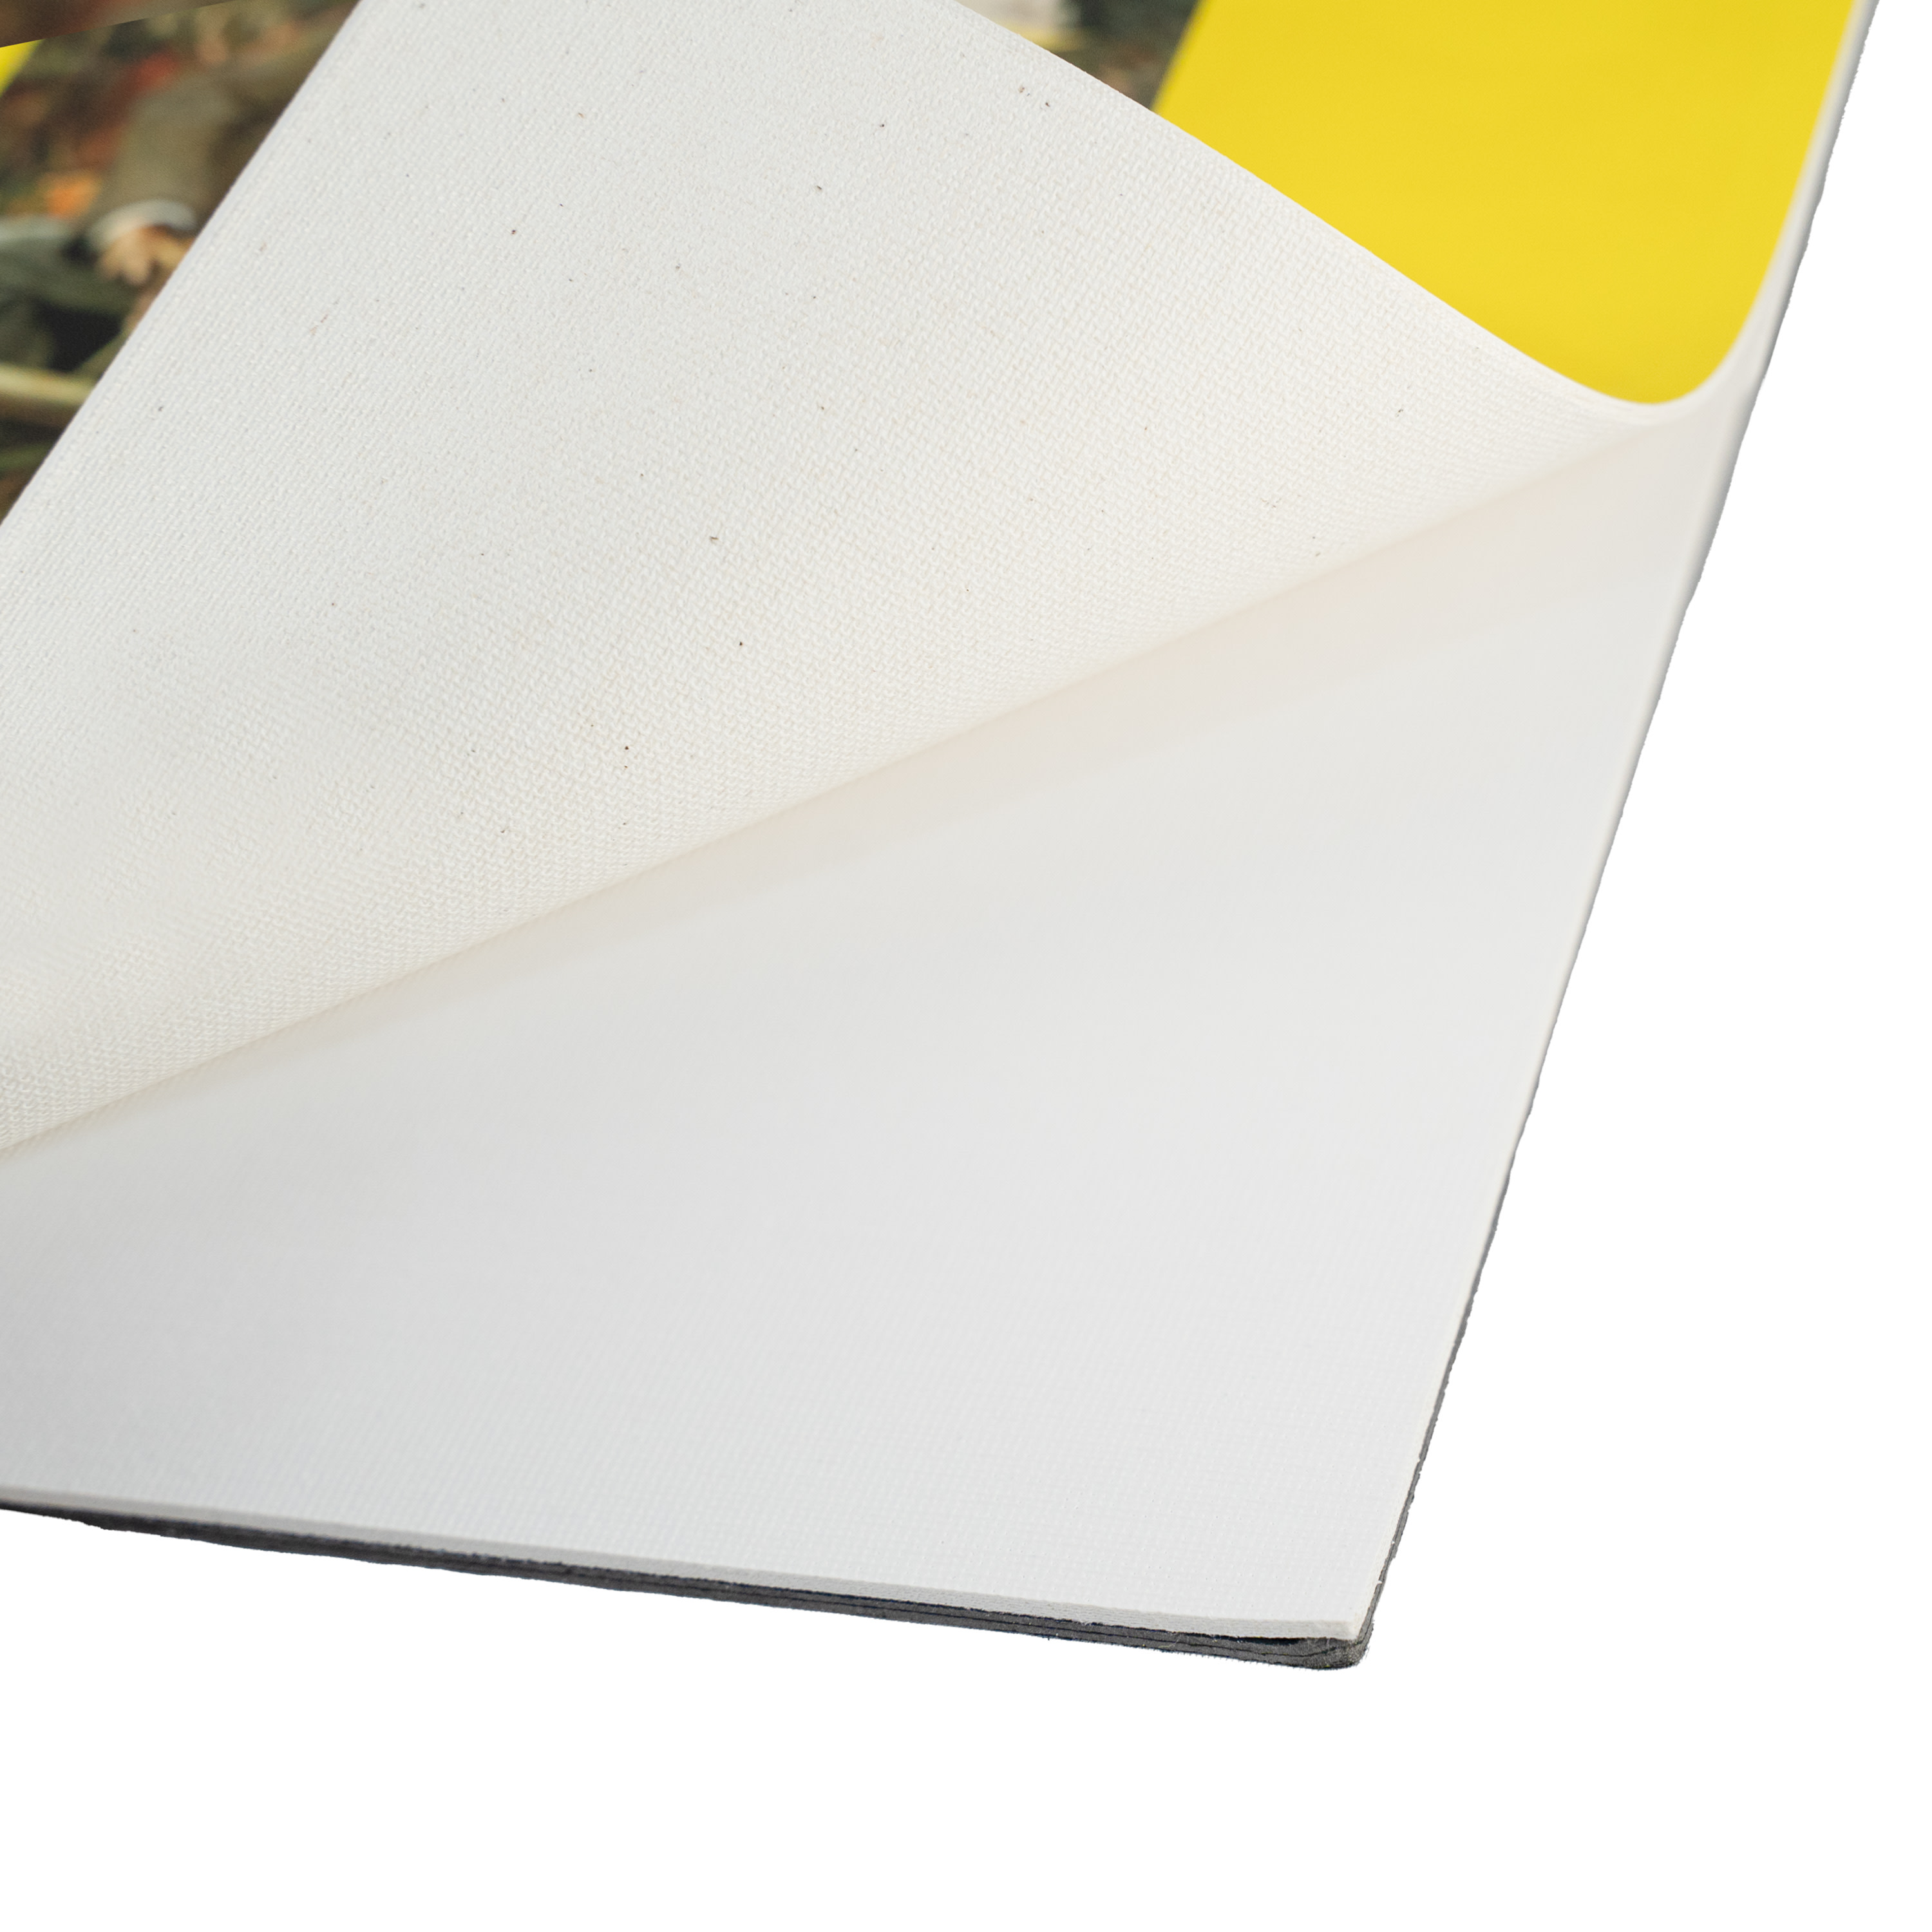 FREDRIX Creative Series White Canvas Pad, 12 x 16 